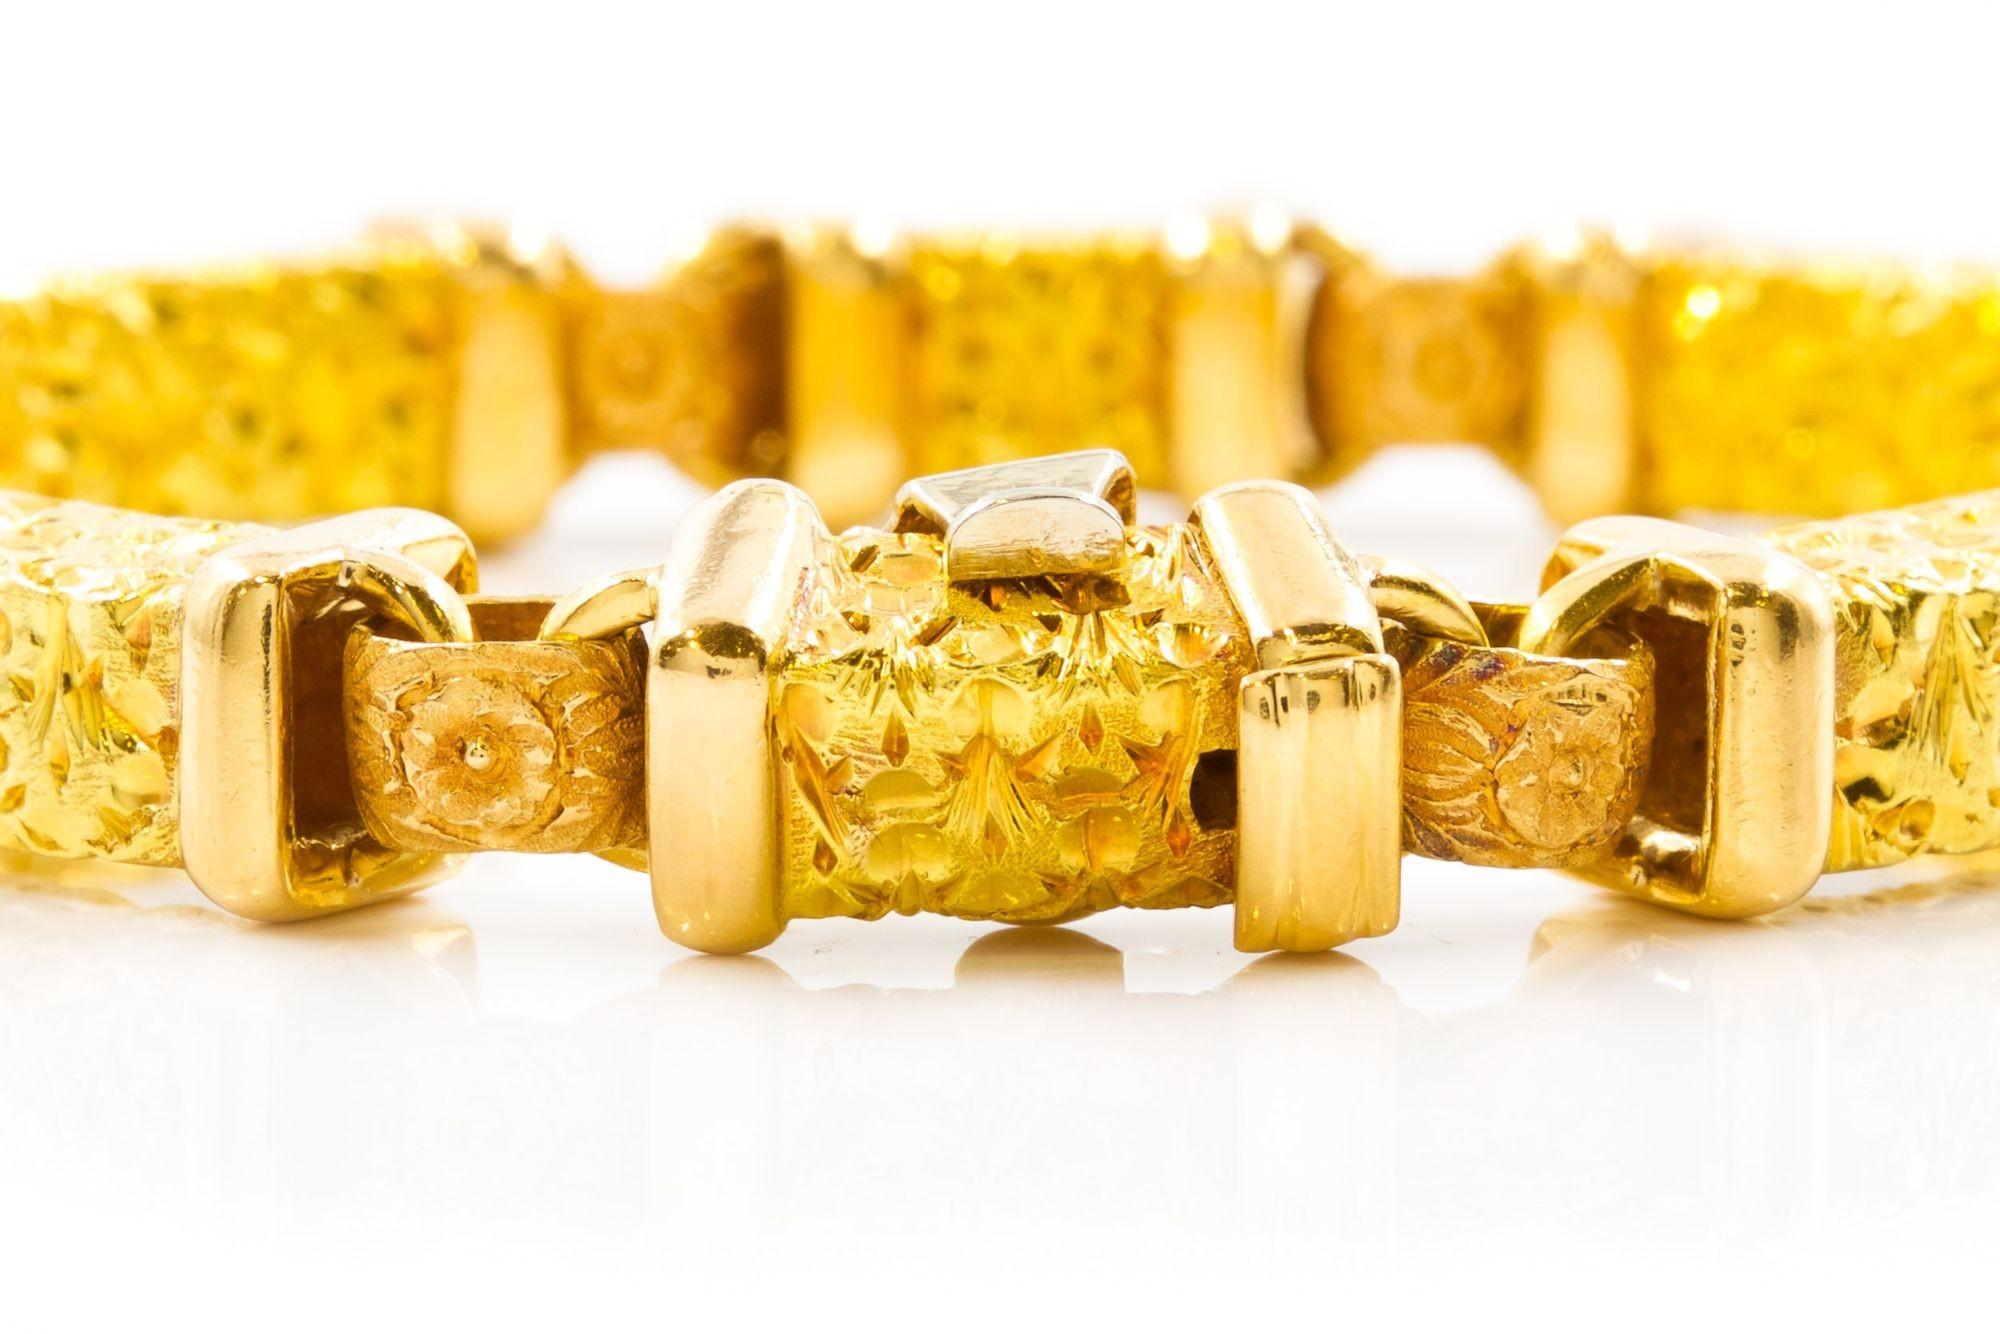 Vintage 18k Rose & Yellow Gold Bright-Cut Bracelet, 8 1/2